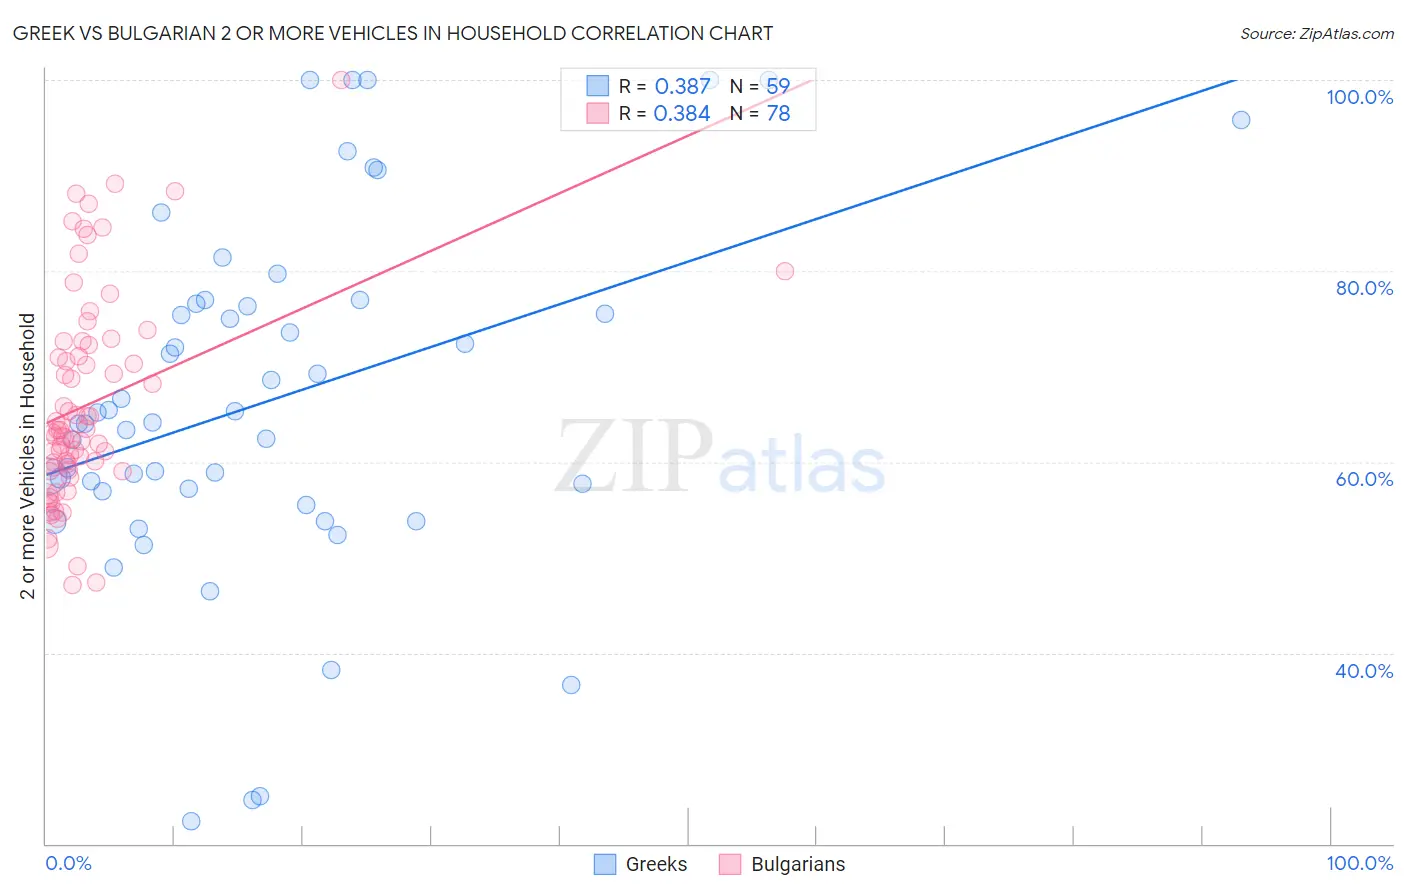 Greek vs Bulgarian 2 or more Vehicles in Household